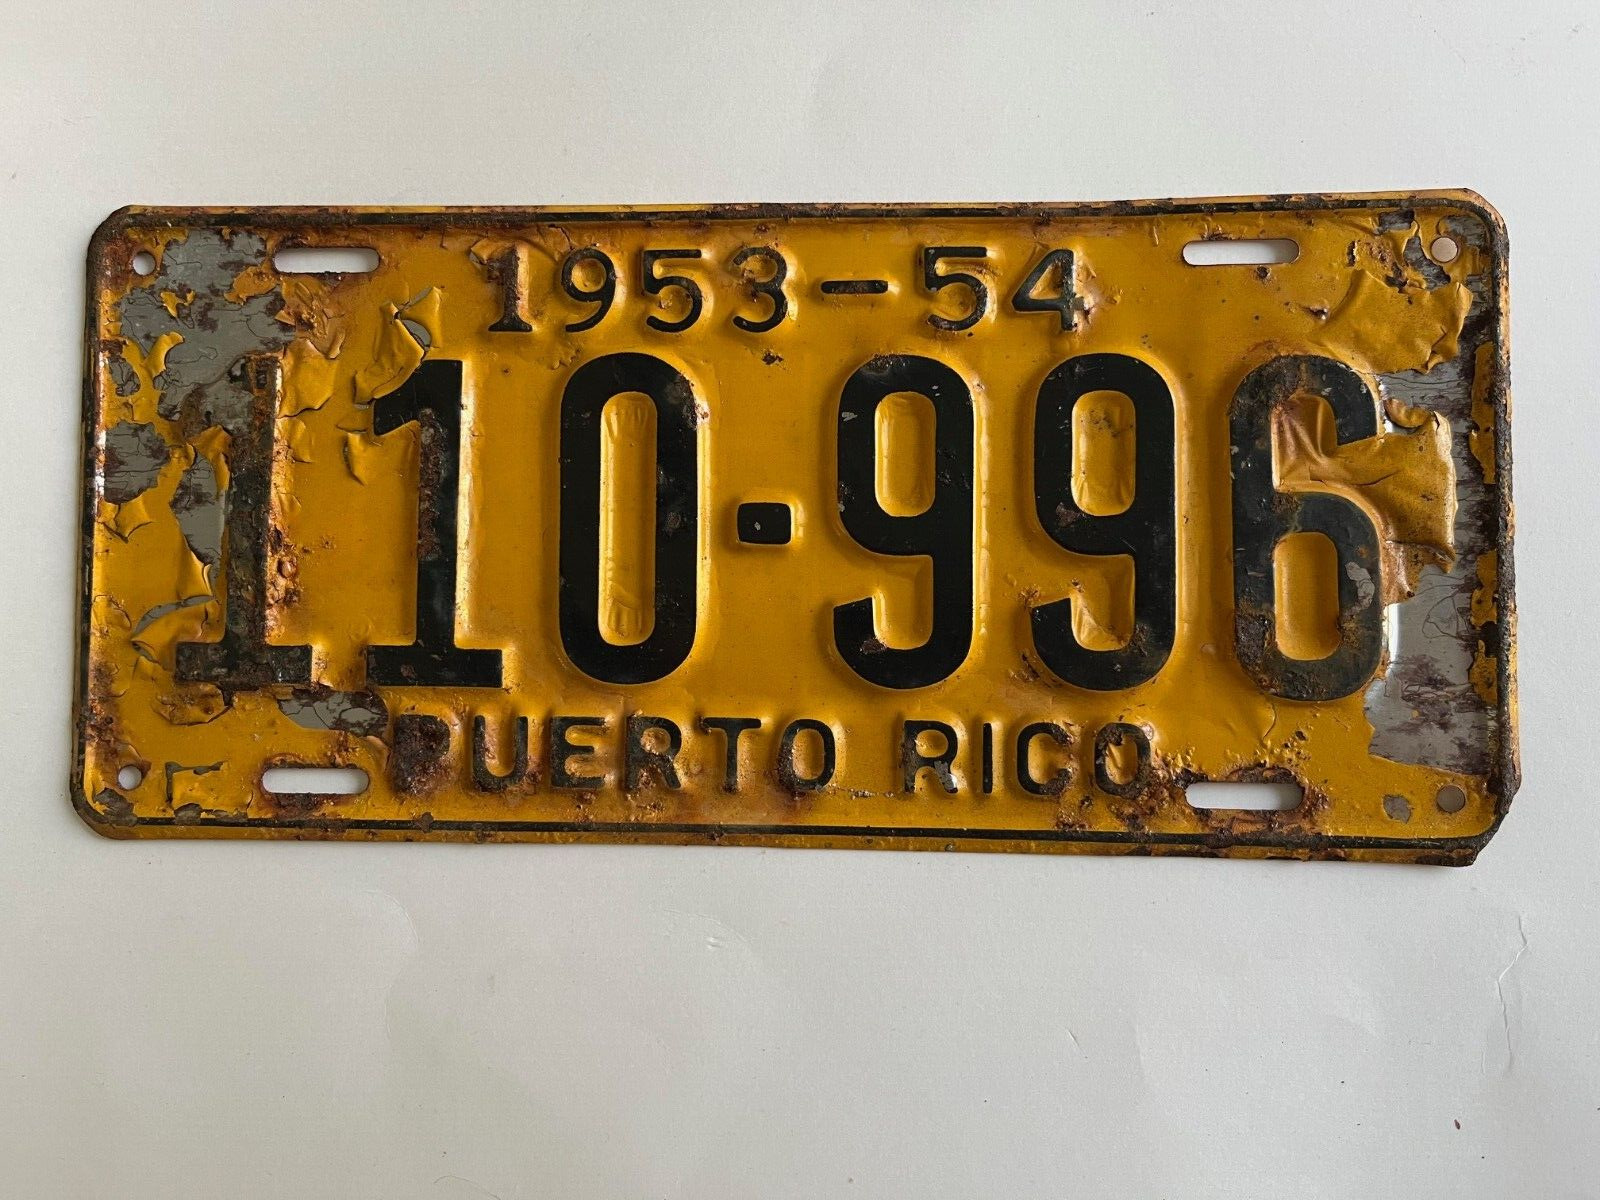 1953 1954 Puerto Rico License Plate Passenger Vehicle All Original, Flaky Paint